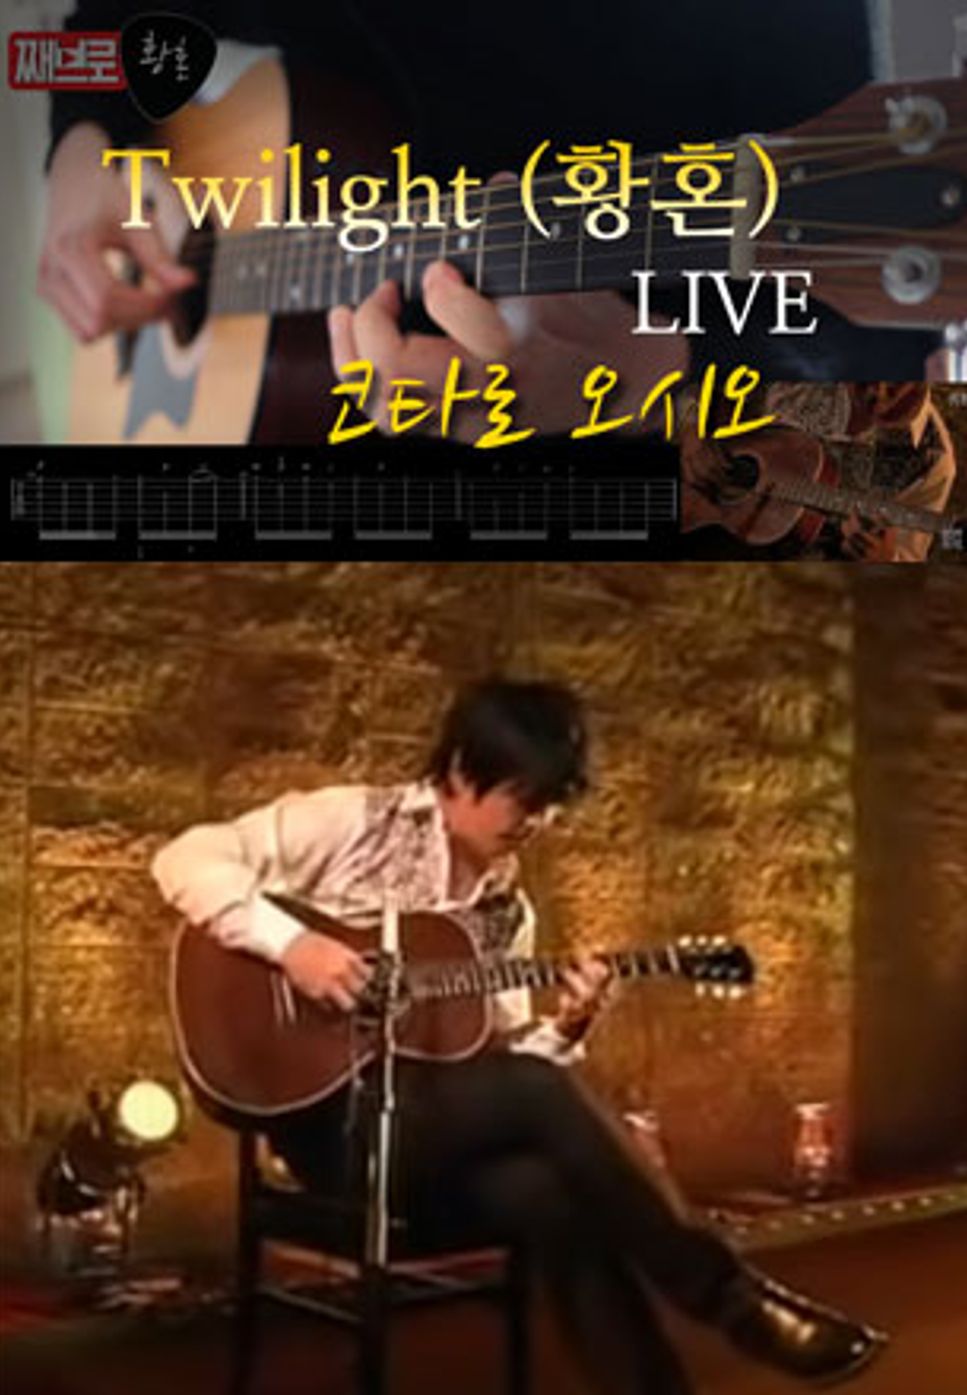 kotaro oshio - twilight live (황혼 라이브) (라이브버전) by zzebro